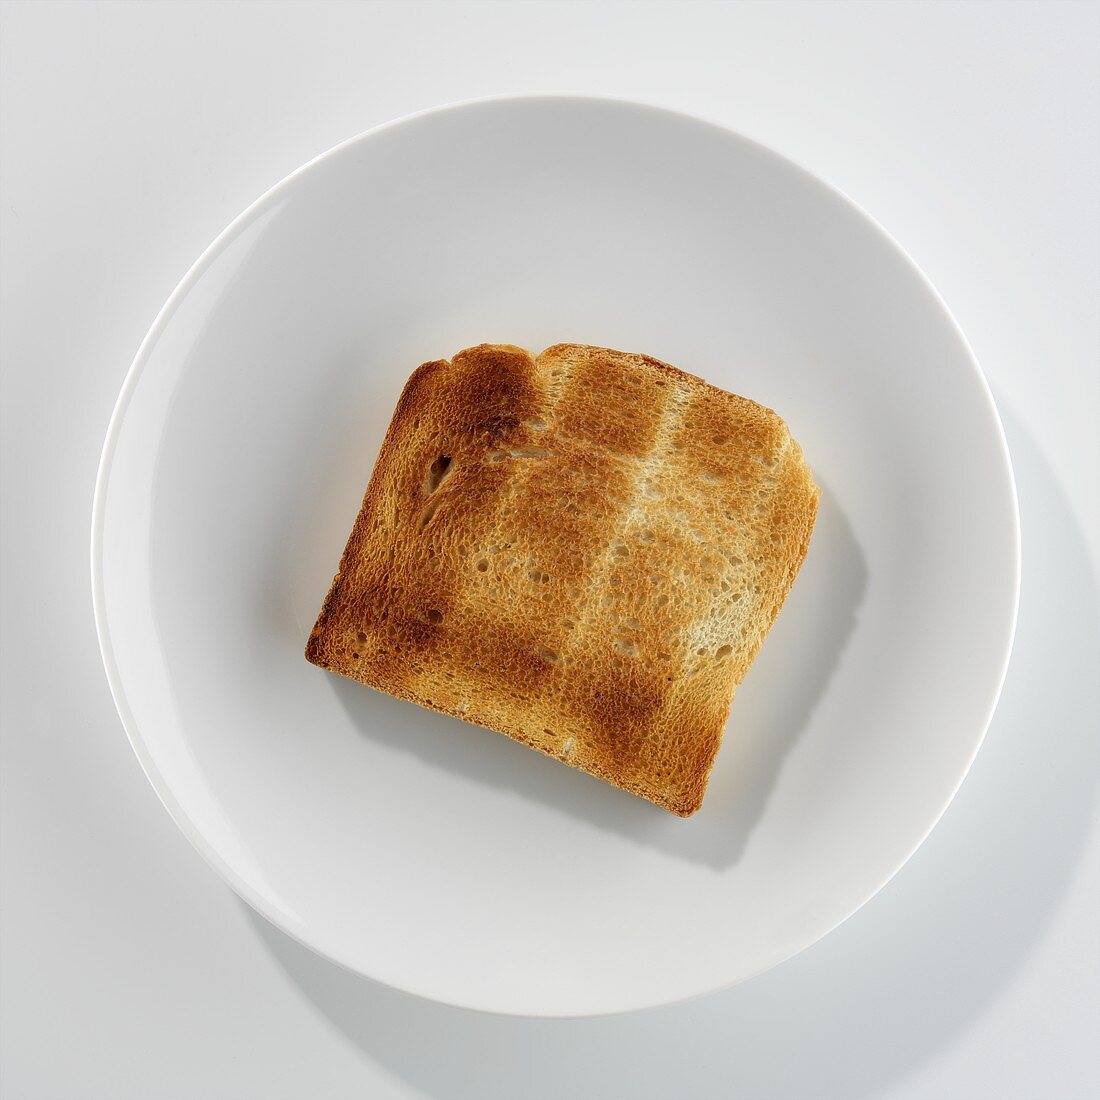 A slice of toast on a plate